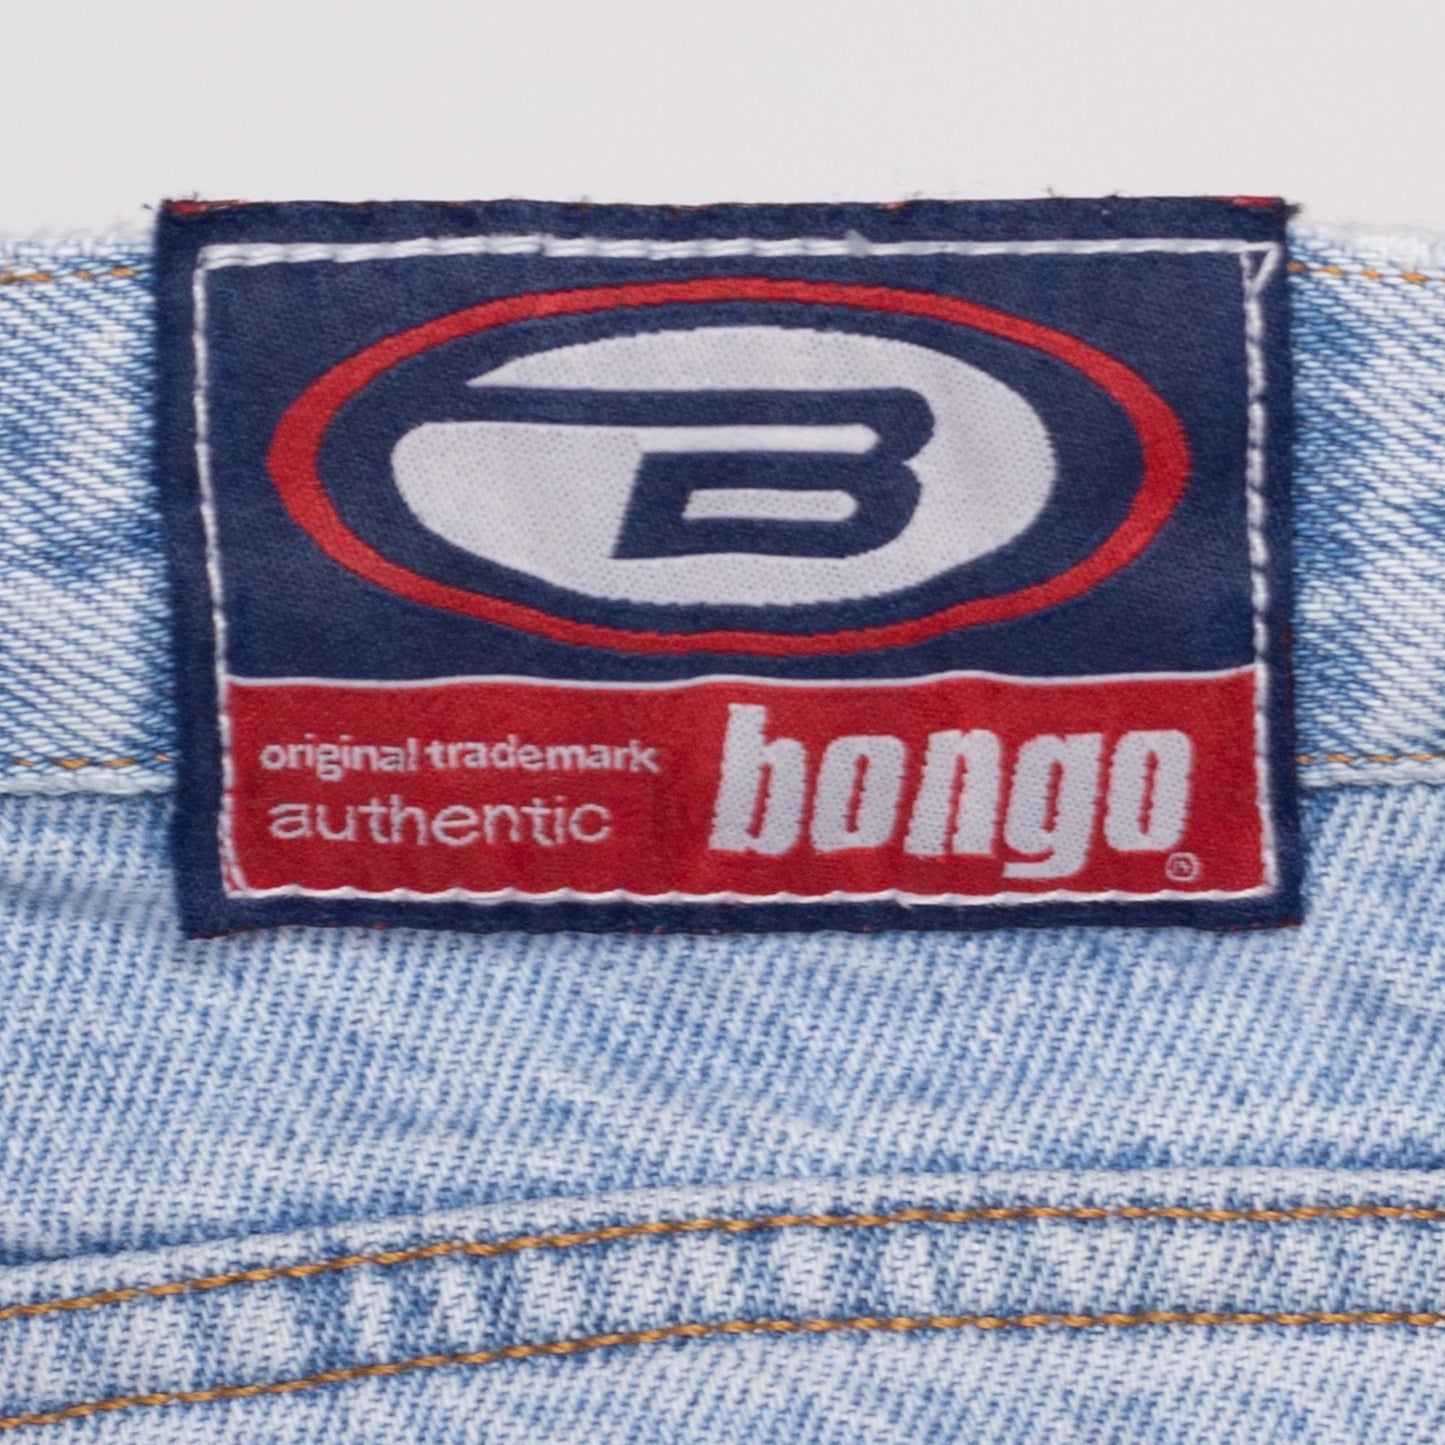 XL| 90s Bongo Boyfriend Jeans - Extra Large | Vintage Light Wash Denim Straight Leg Mid Rise Jeans